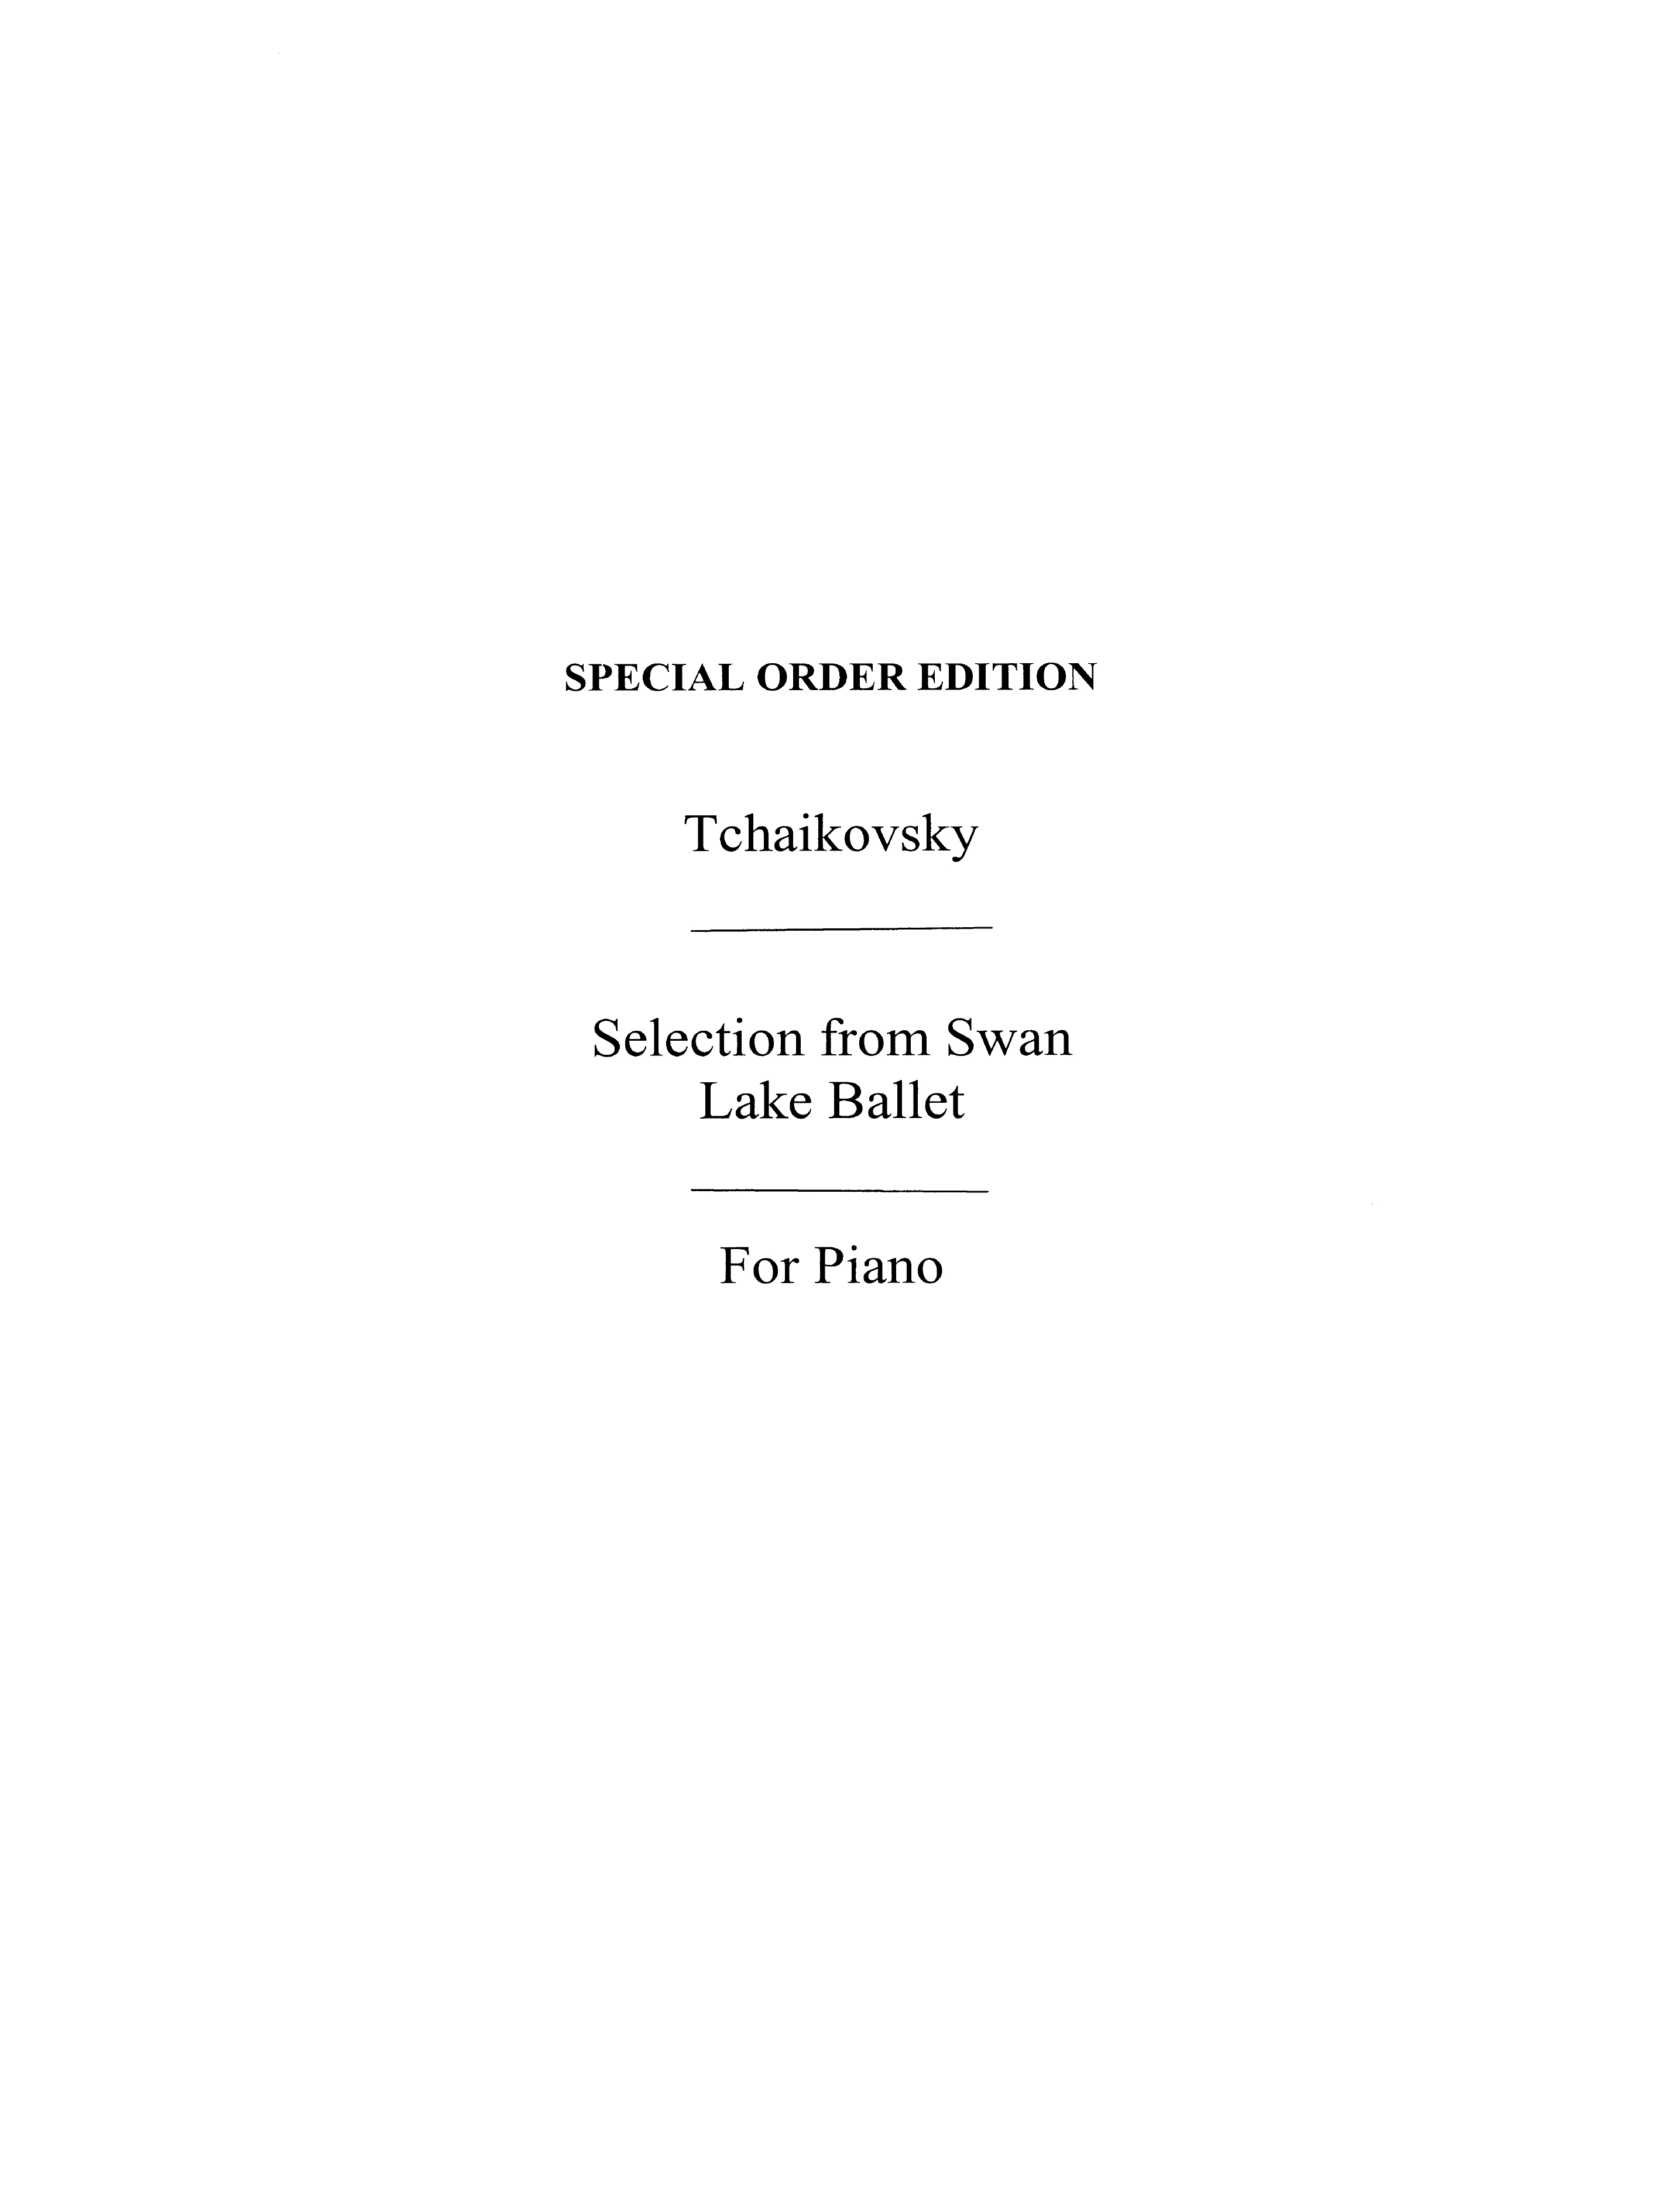 Tchaikovsky Swan Lake Ballet Selection (Charrosin) Pf